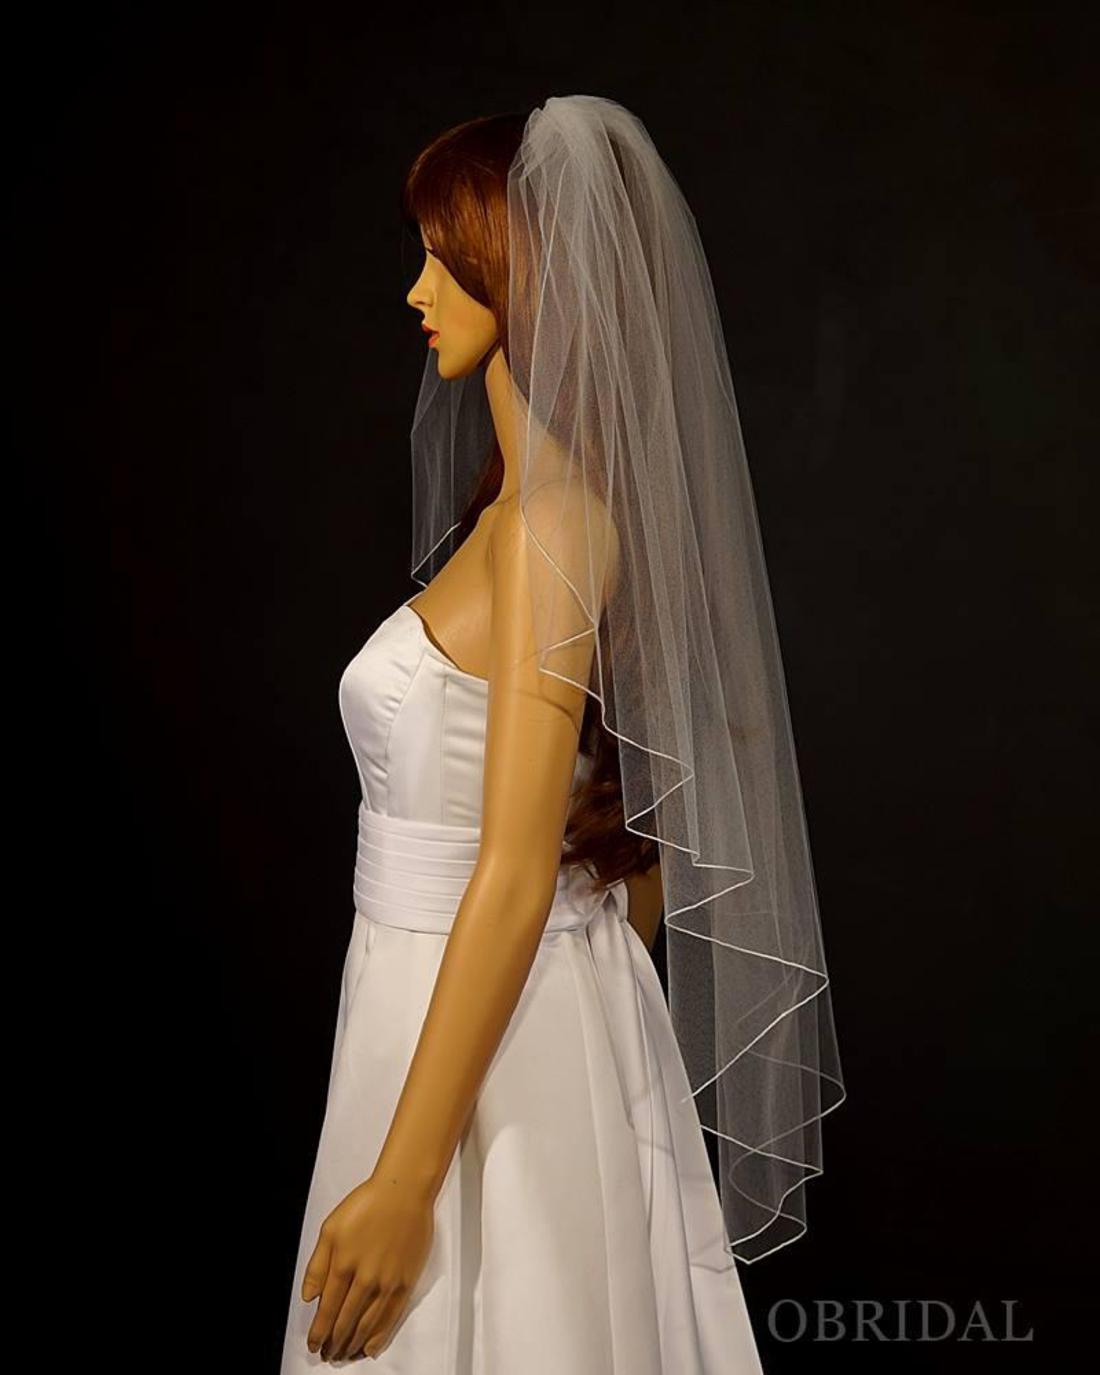 Angel Cut Veil, Wedding Veil Styles